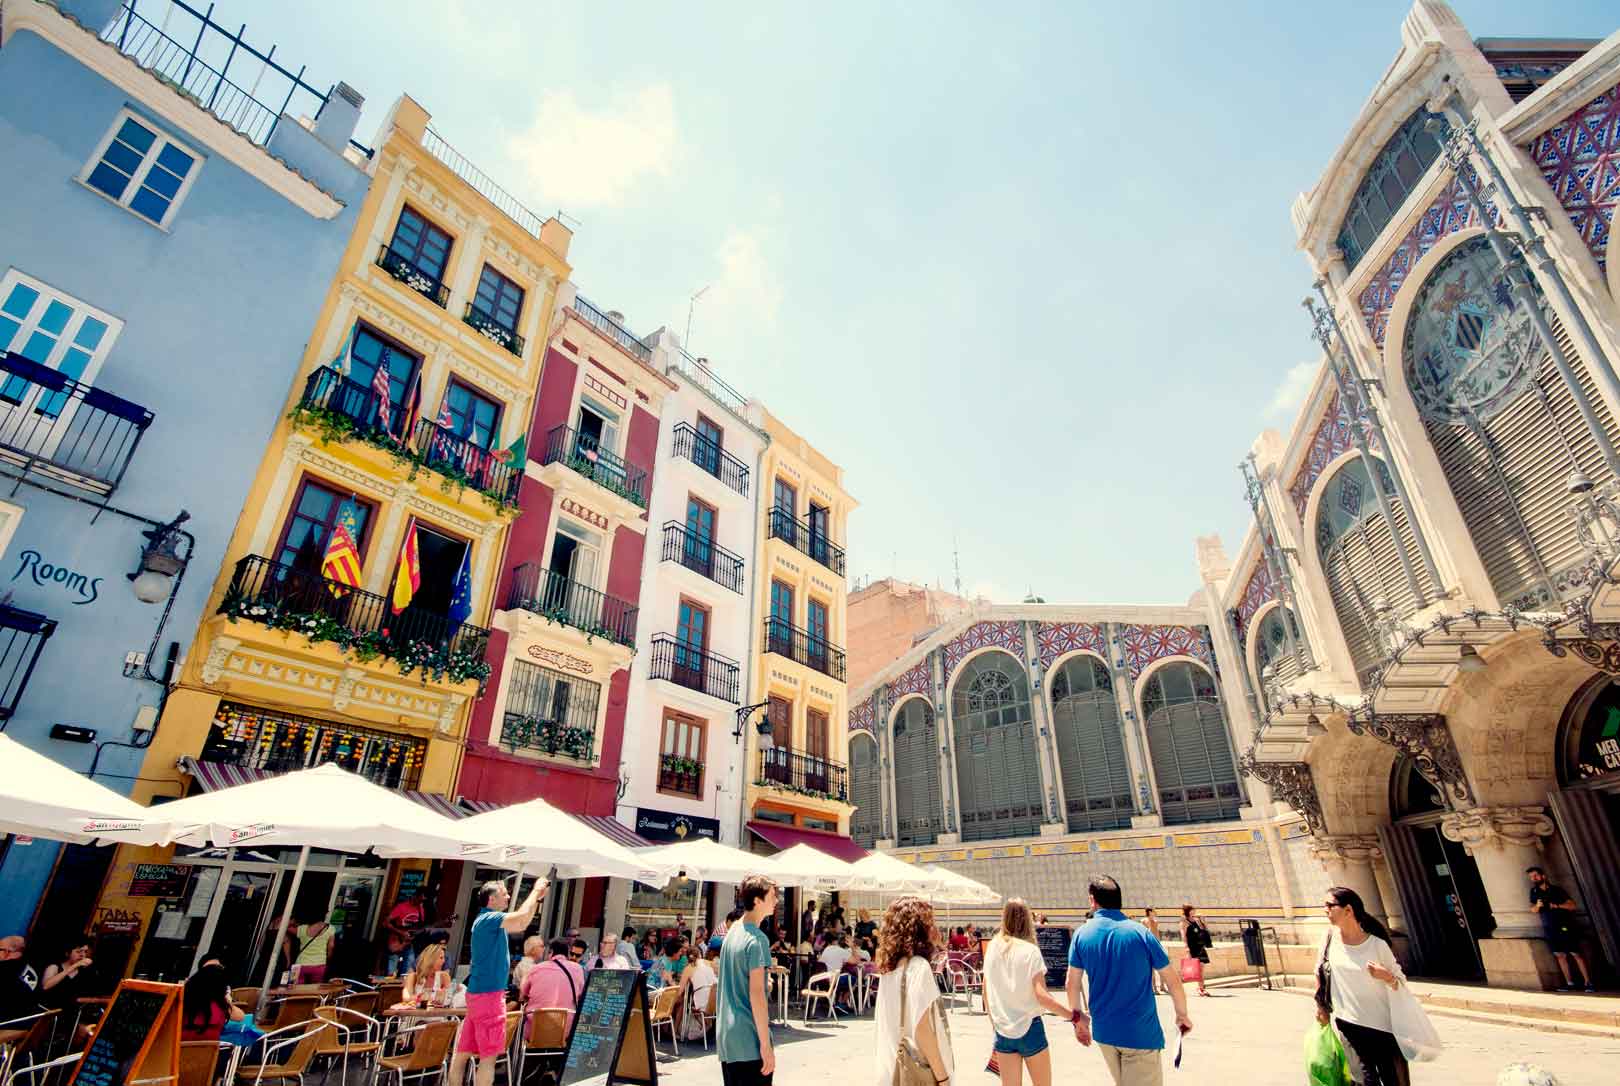 Top 5 activities in the region of Valencia